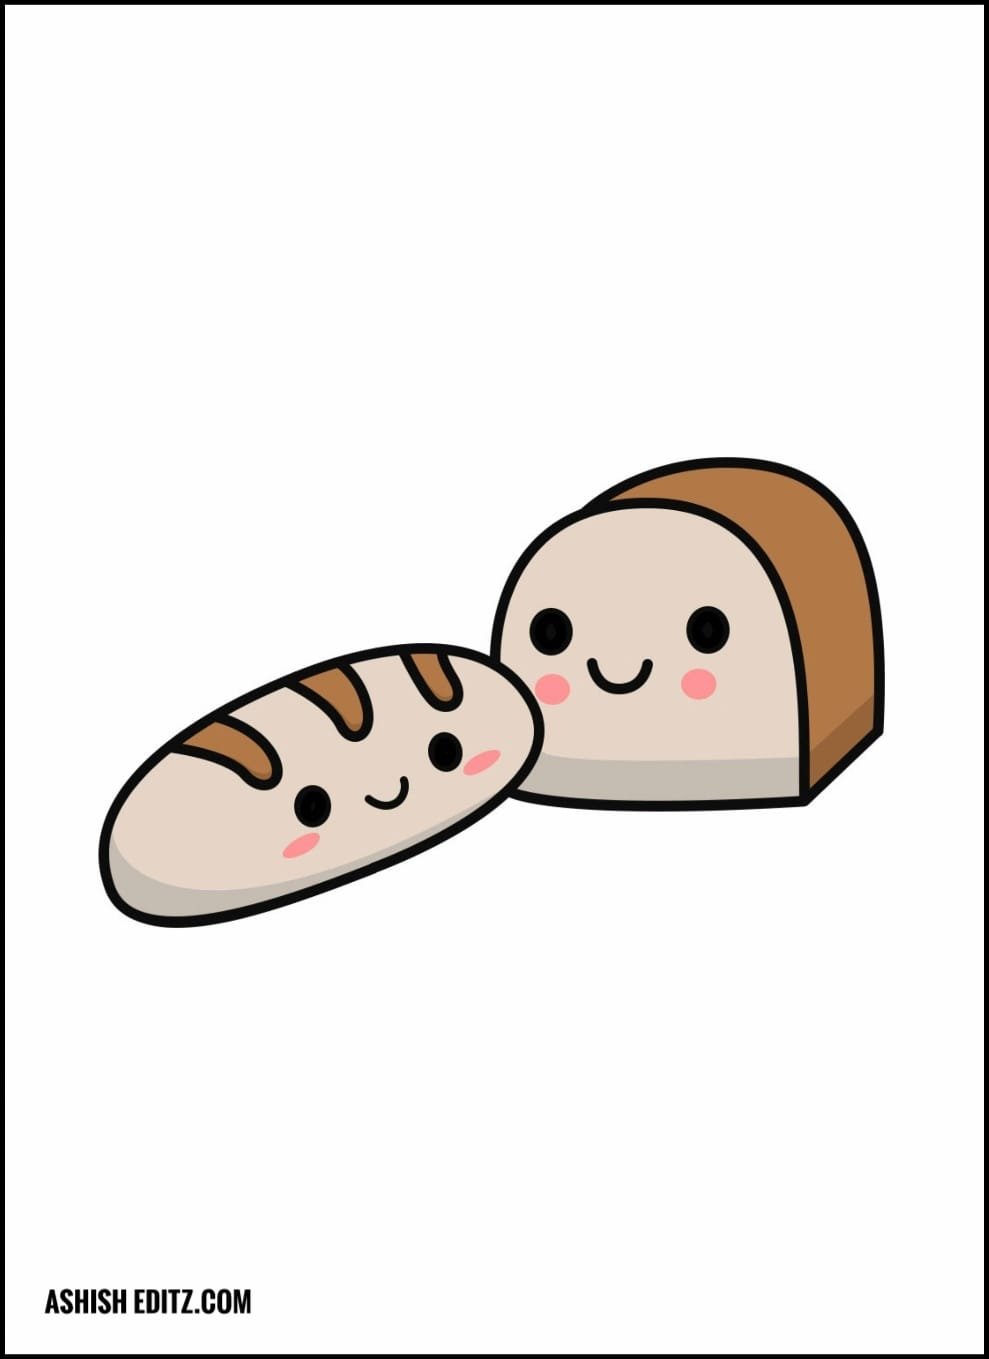 Premium Vector | Simple flat icon image of pita bread